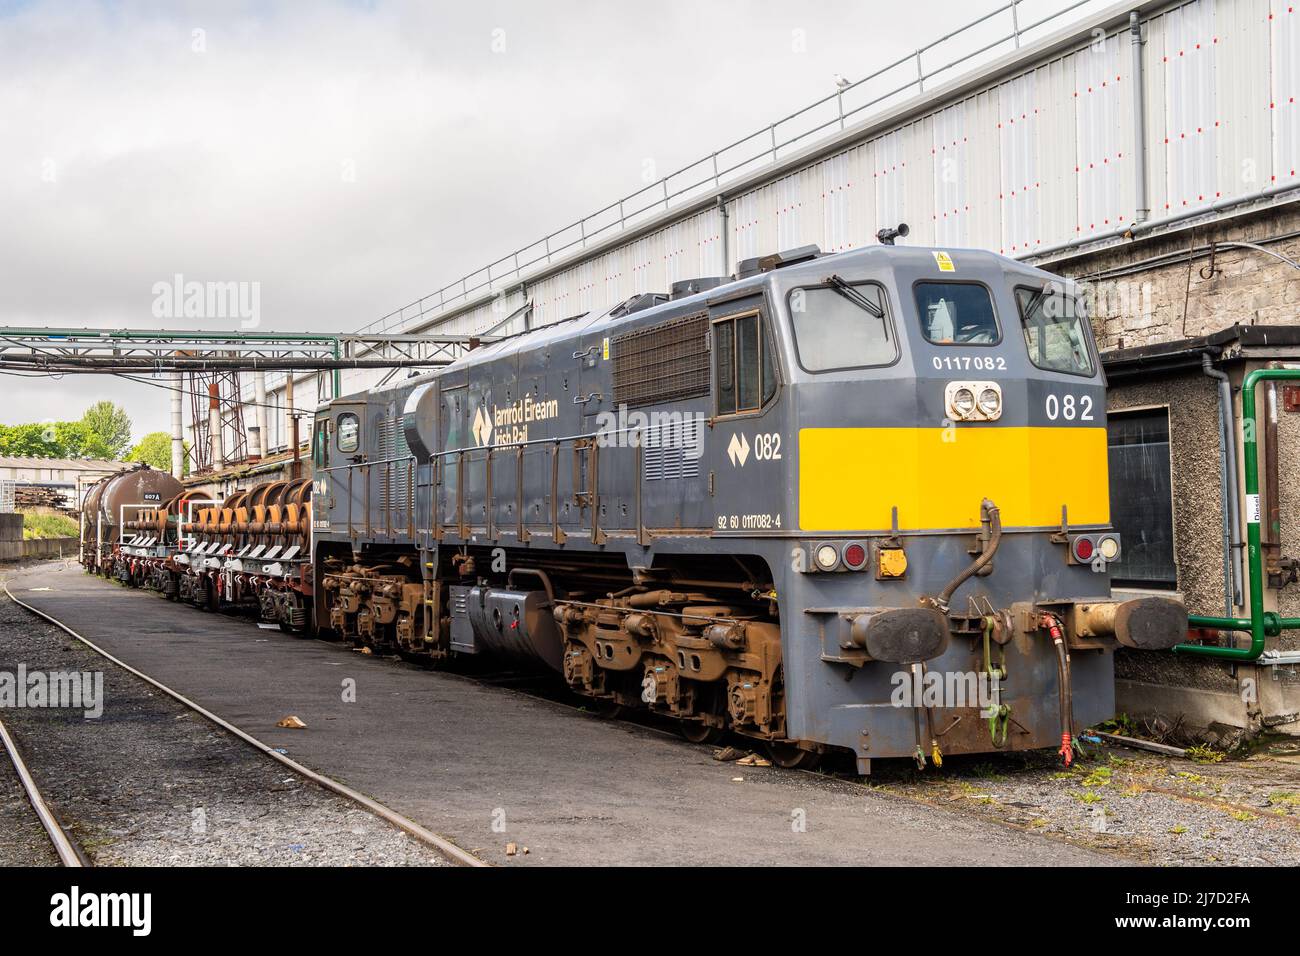 Locomotora Irish Rail en un tren frieght, con su propio sistema de transporte en Inchicore Railway Works, Dublín, Irlanda. Foto de stock